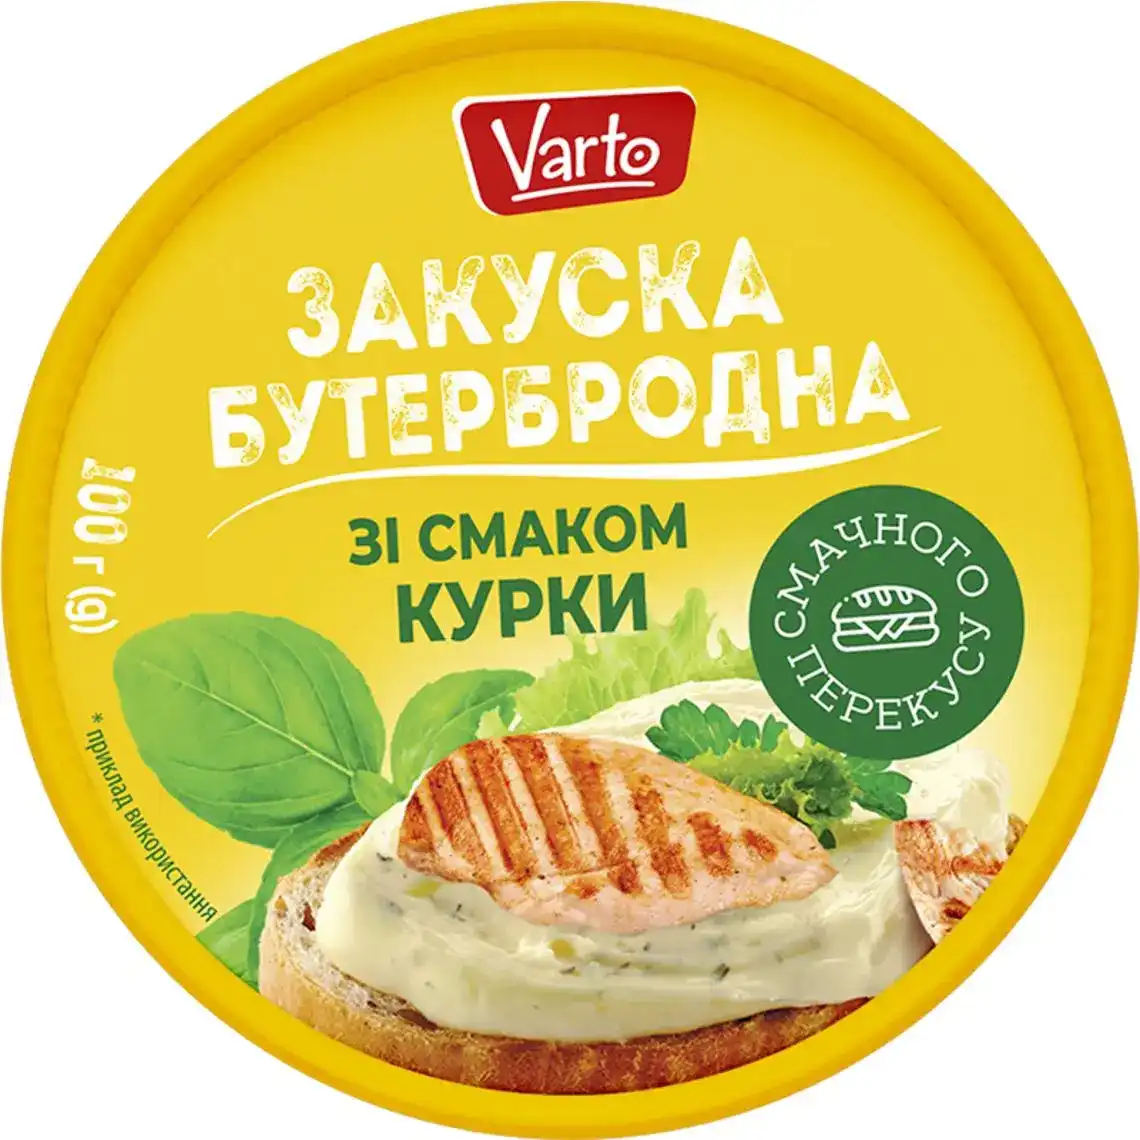 Фото 1 - Закуска Varto бутербродная со вкусом КУРКИ 100г